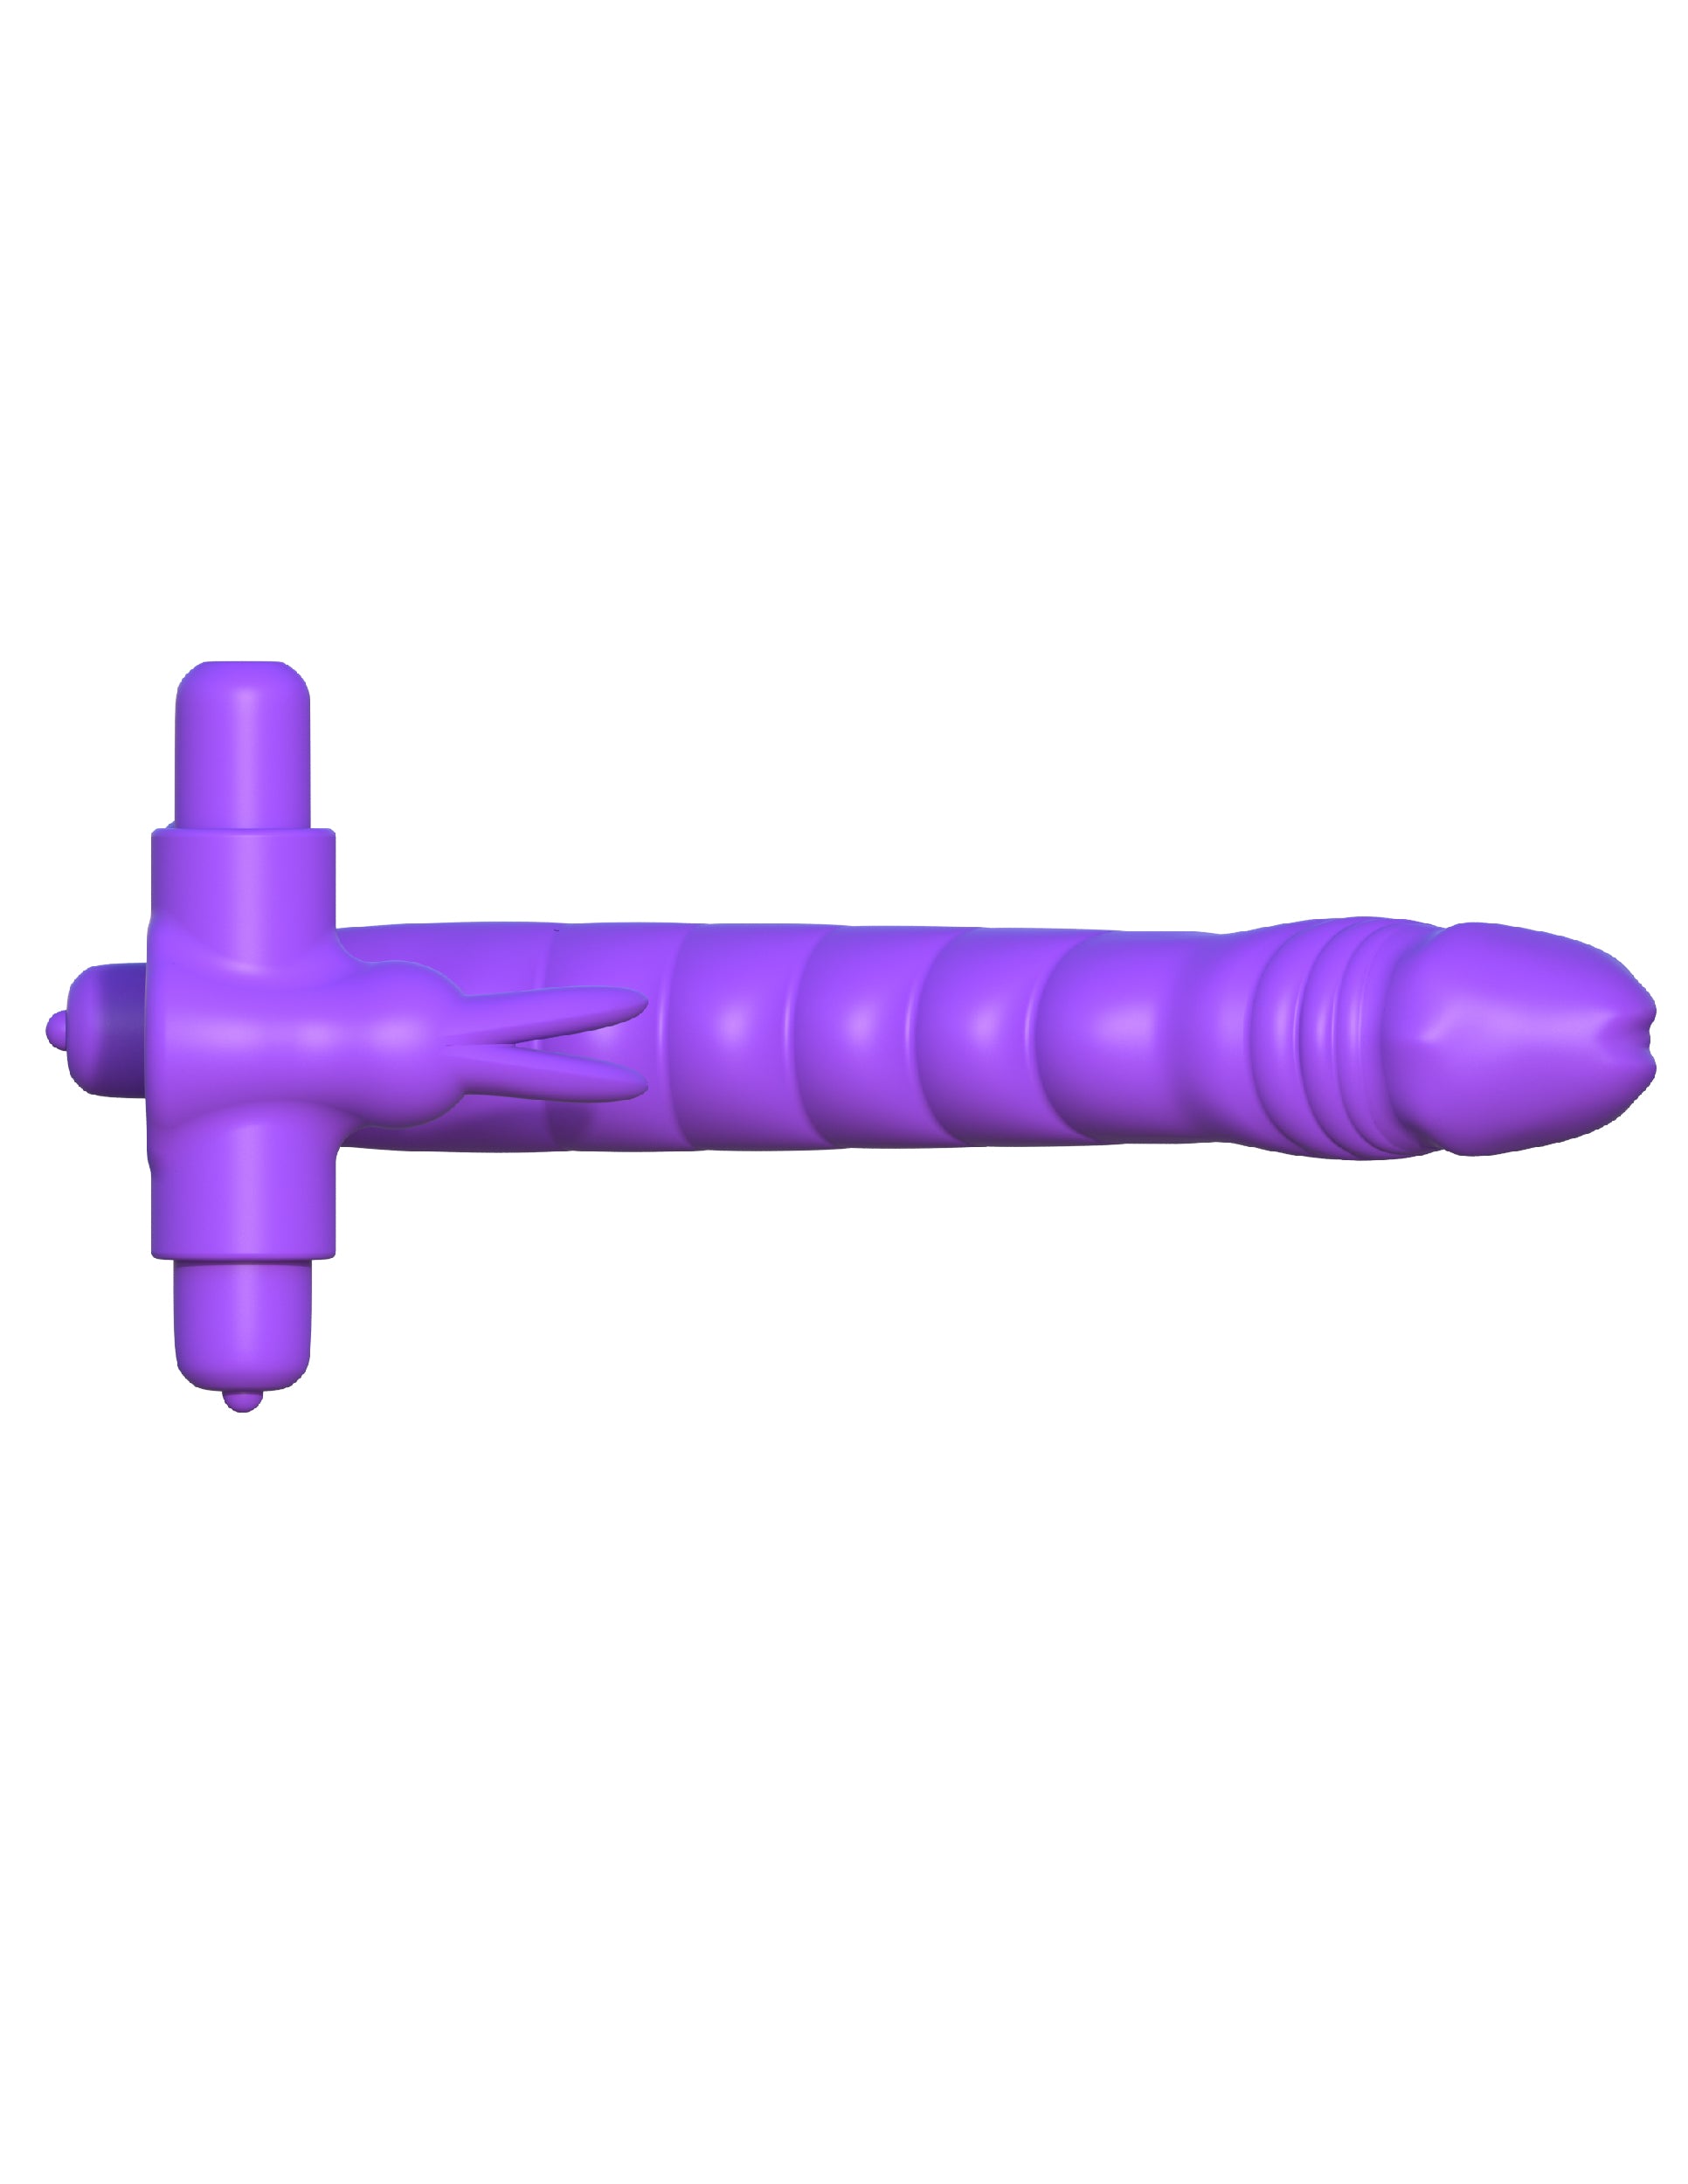 Fantasy C-ringz Silicone Double Pene Rabbit - Purple